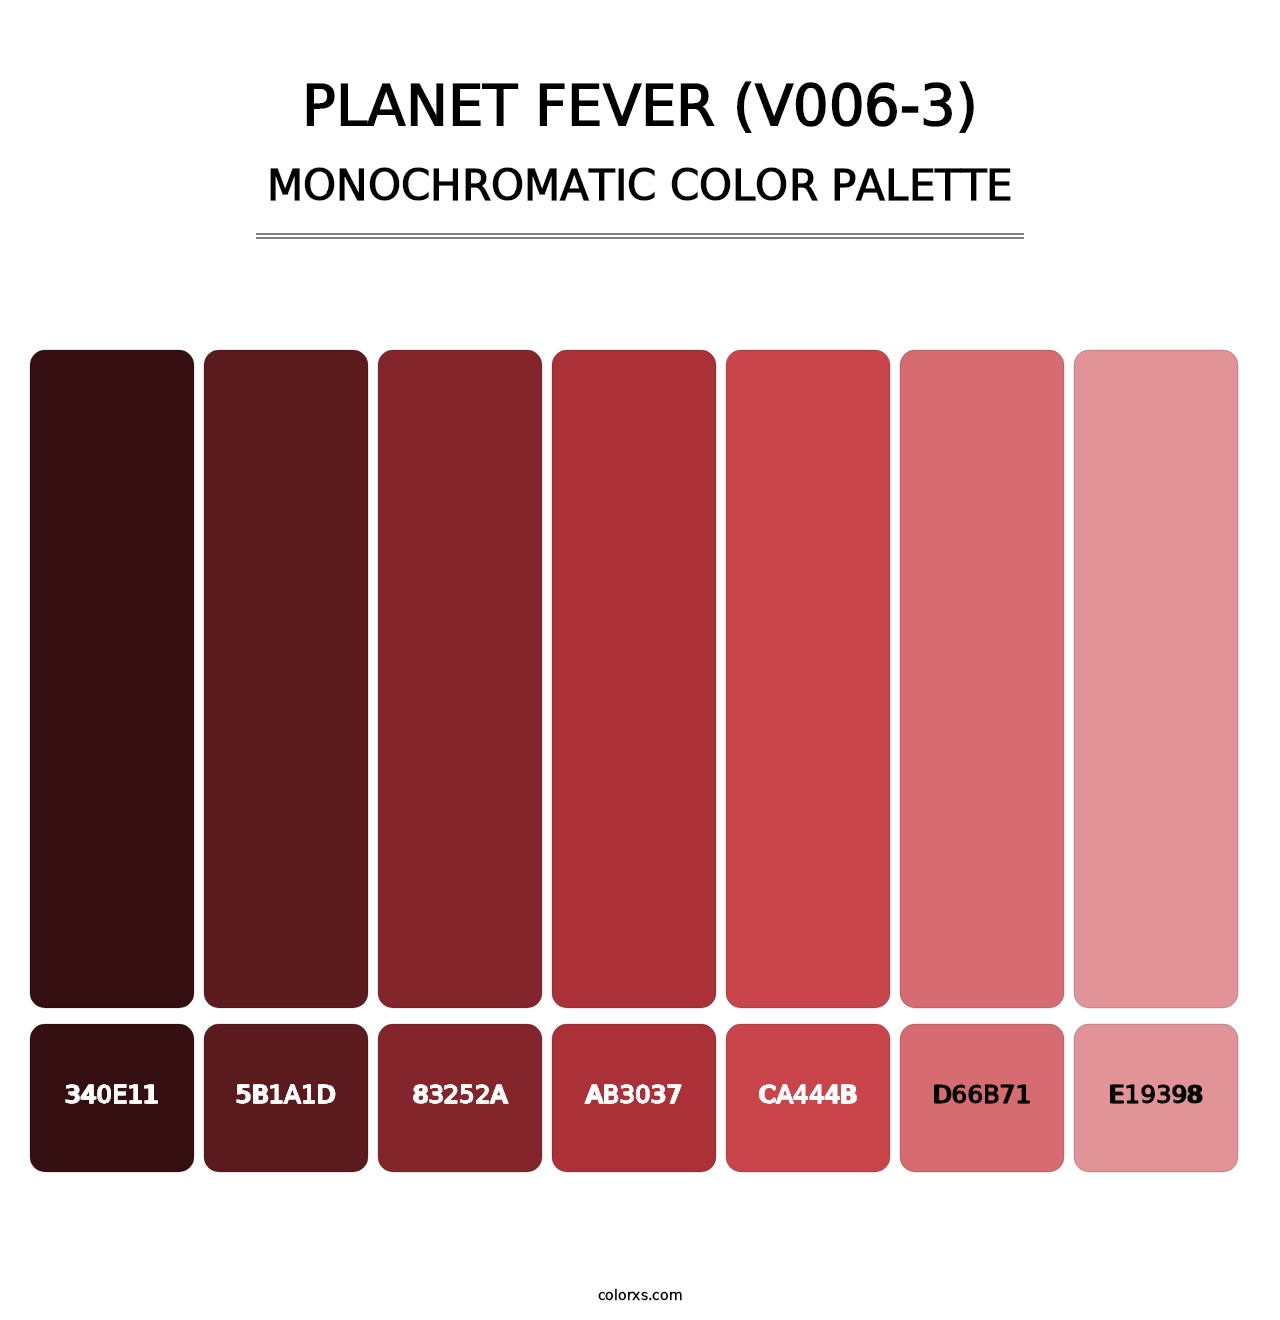 Planet Fever (V006-3) - Monochromatic Color Palette